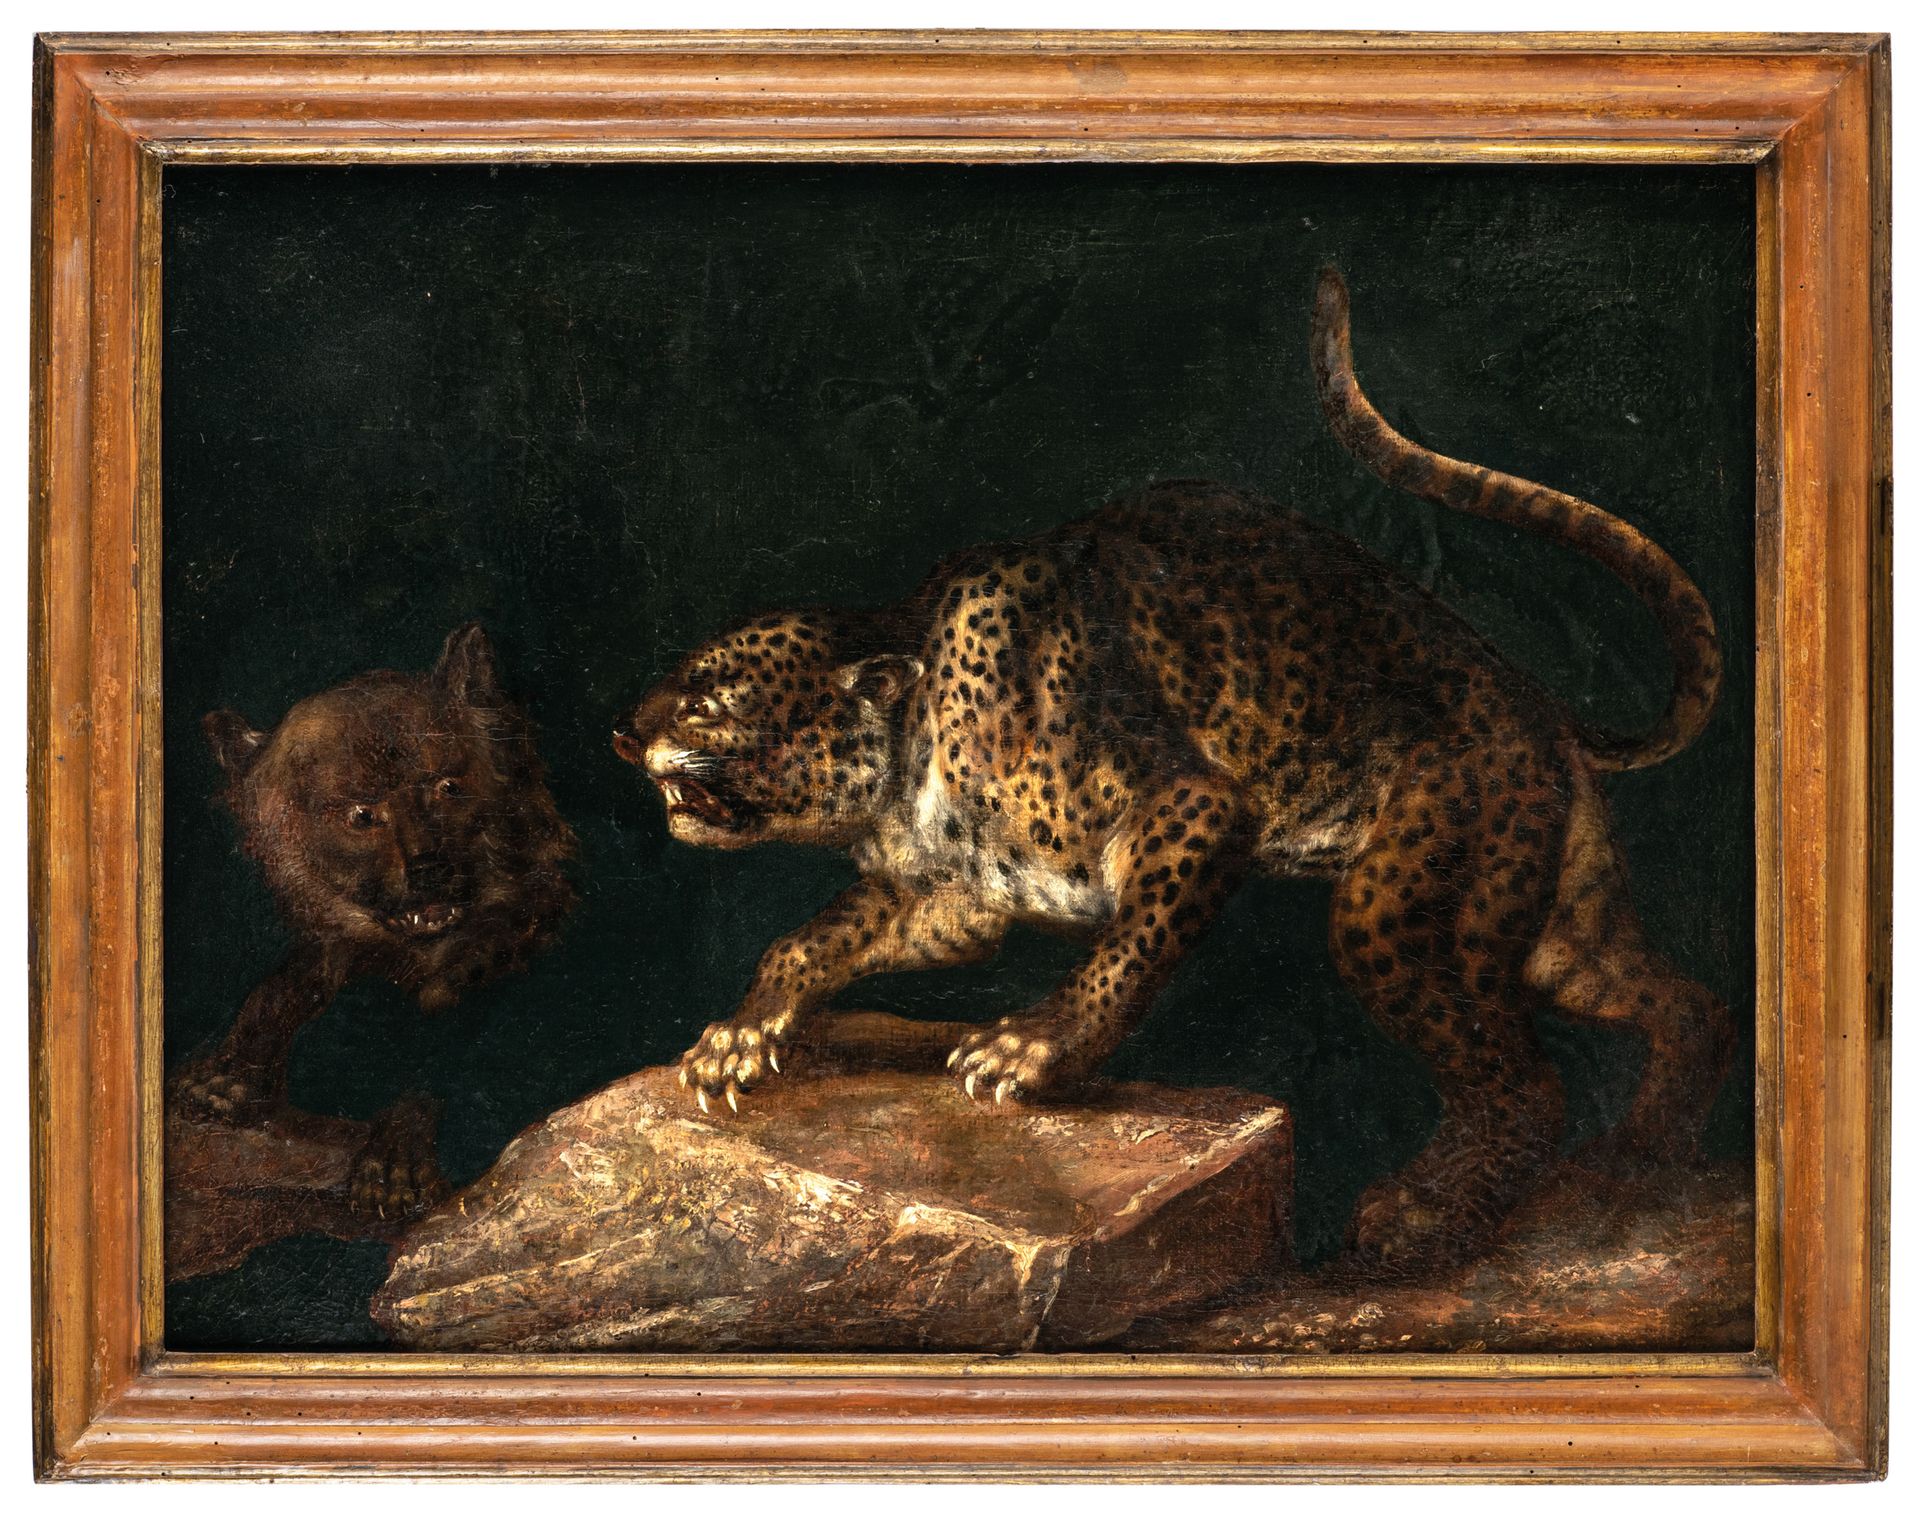 PITTORE DEL XVIII-XIX SECOLO Tiere
Öl auf Leinwand, cm 55X73